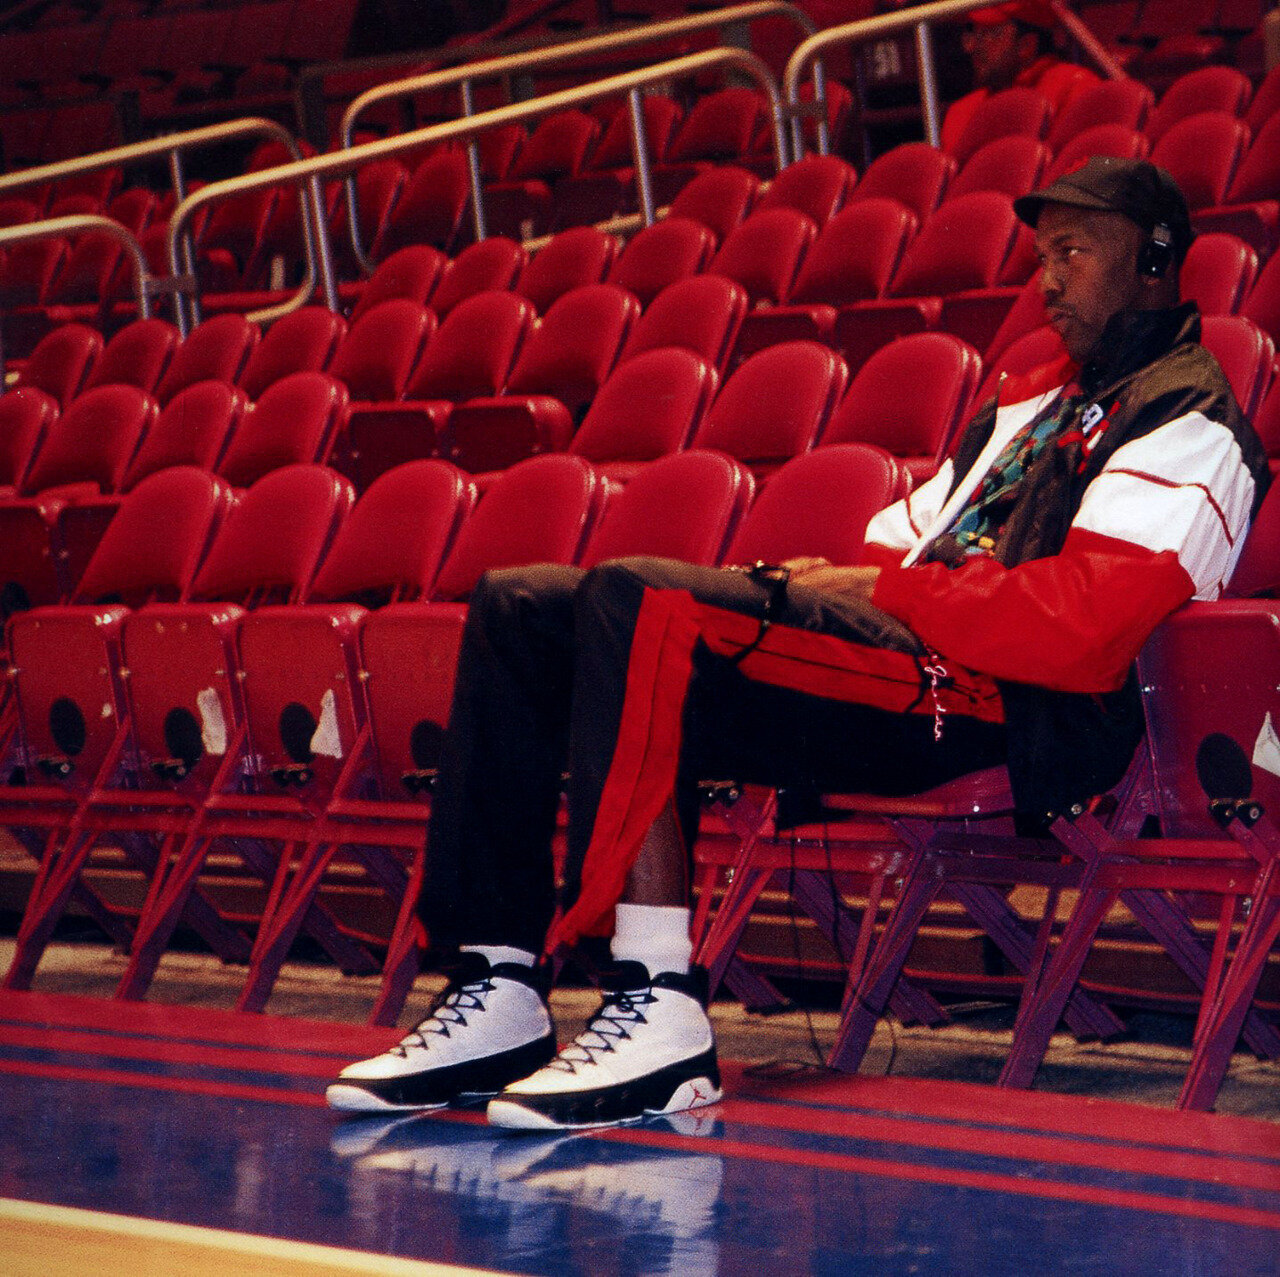 Fuera de servicio comedia inteligencia Air Jordan 9 Retro "Chile Red" | [Release Details] | The Retro Insider